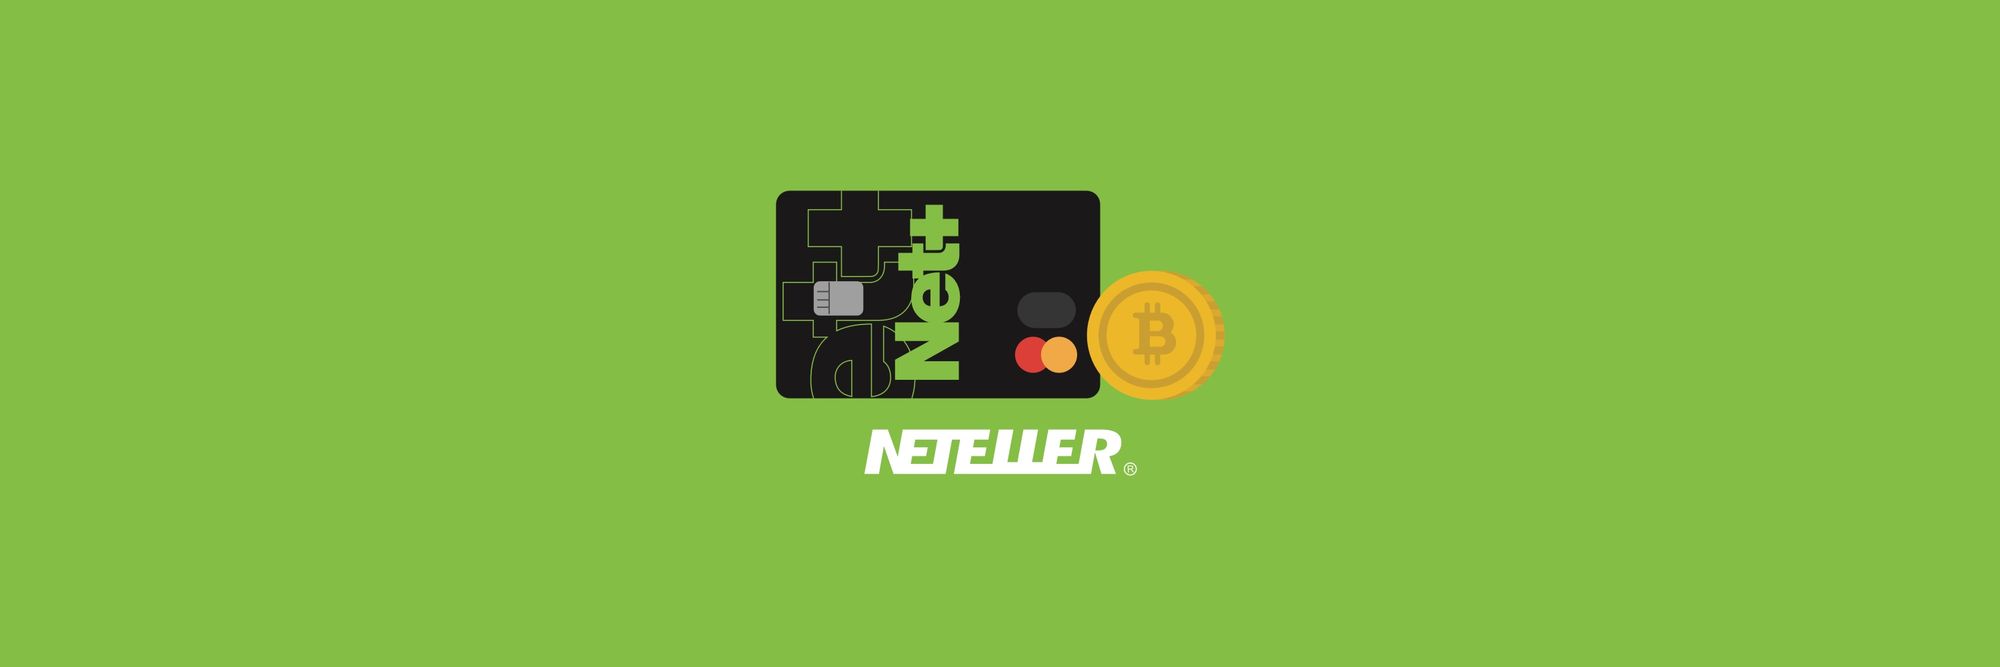 NETELLER Adopts Bitcoin